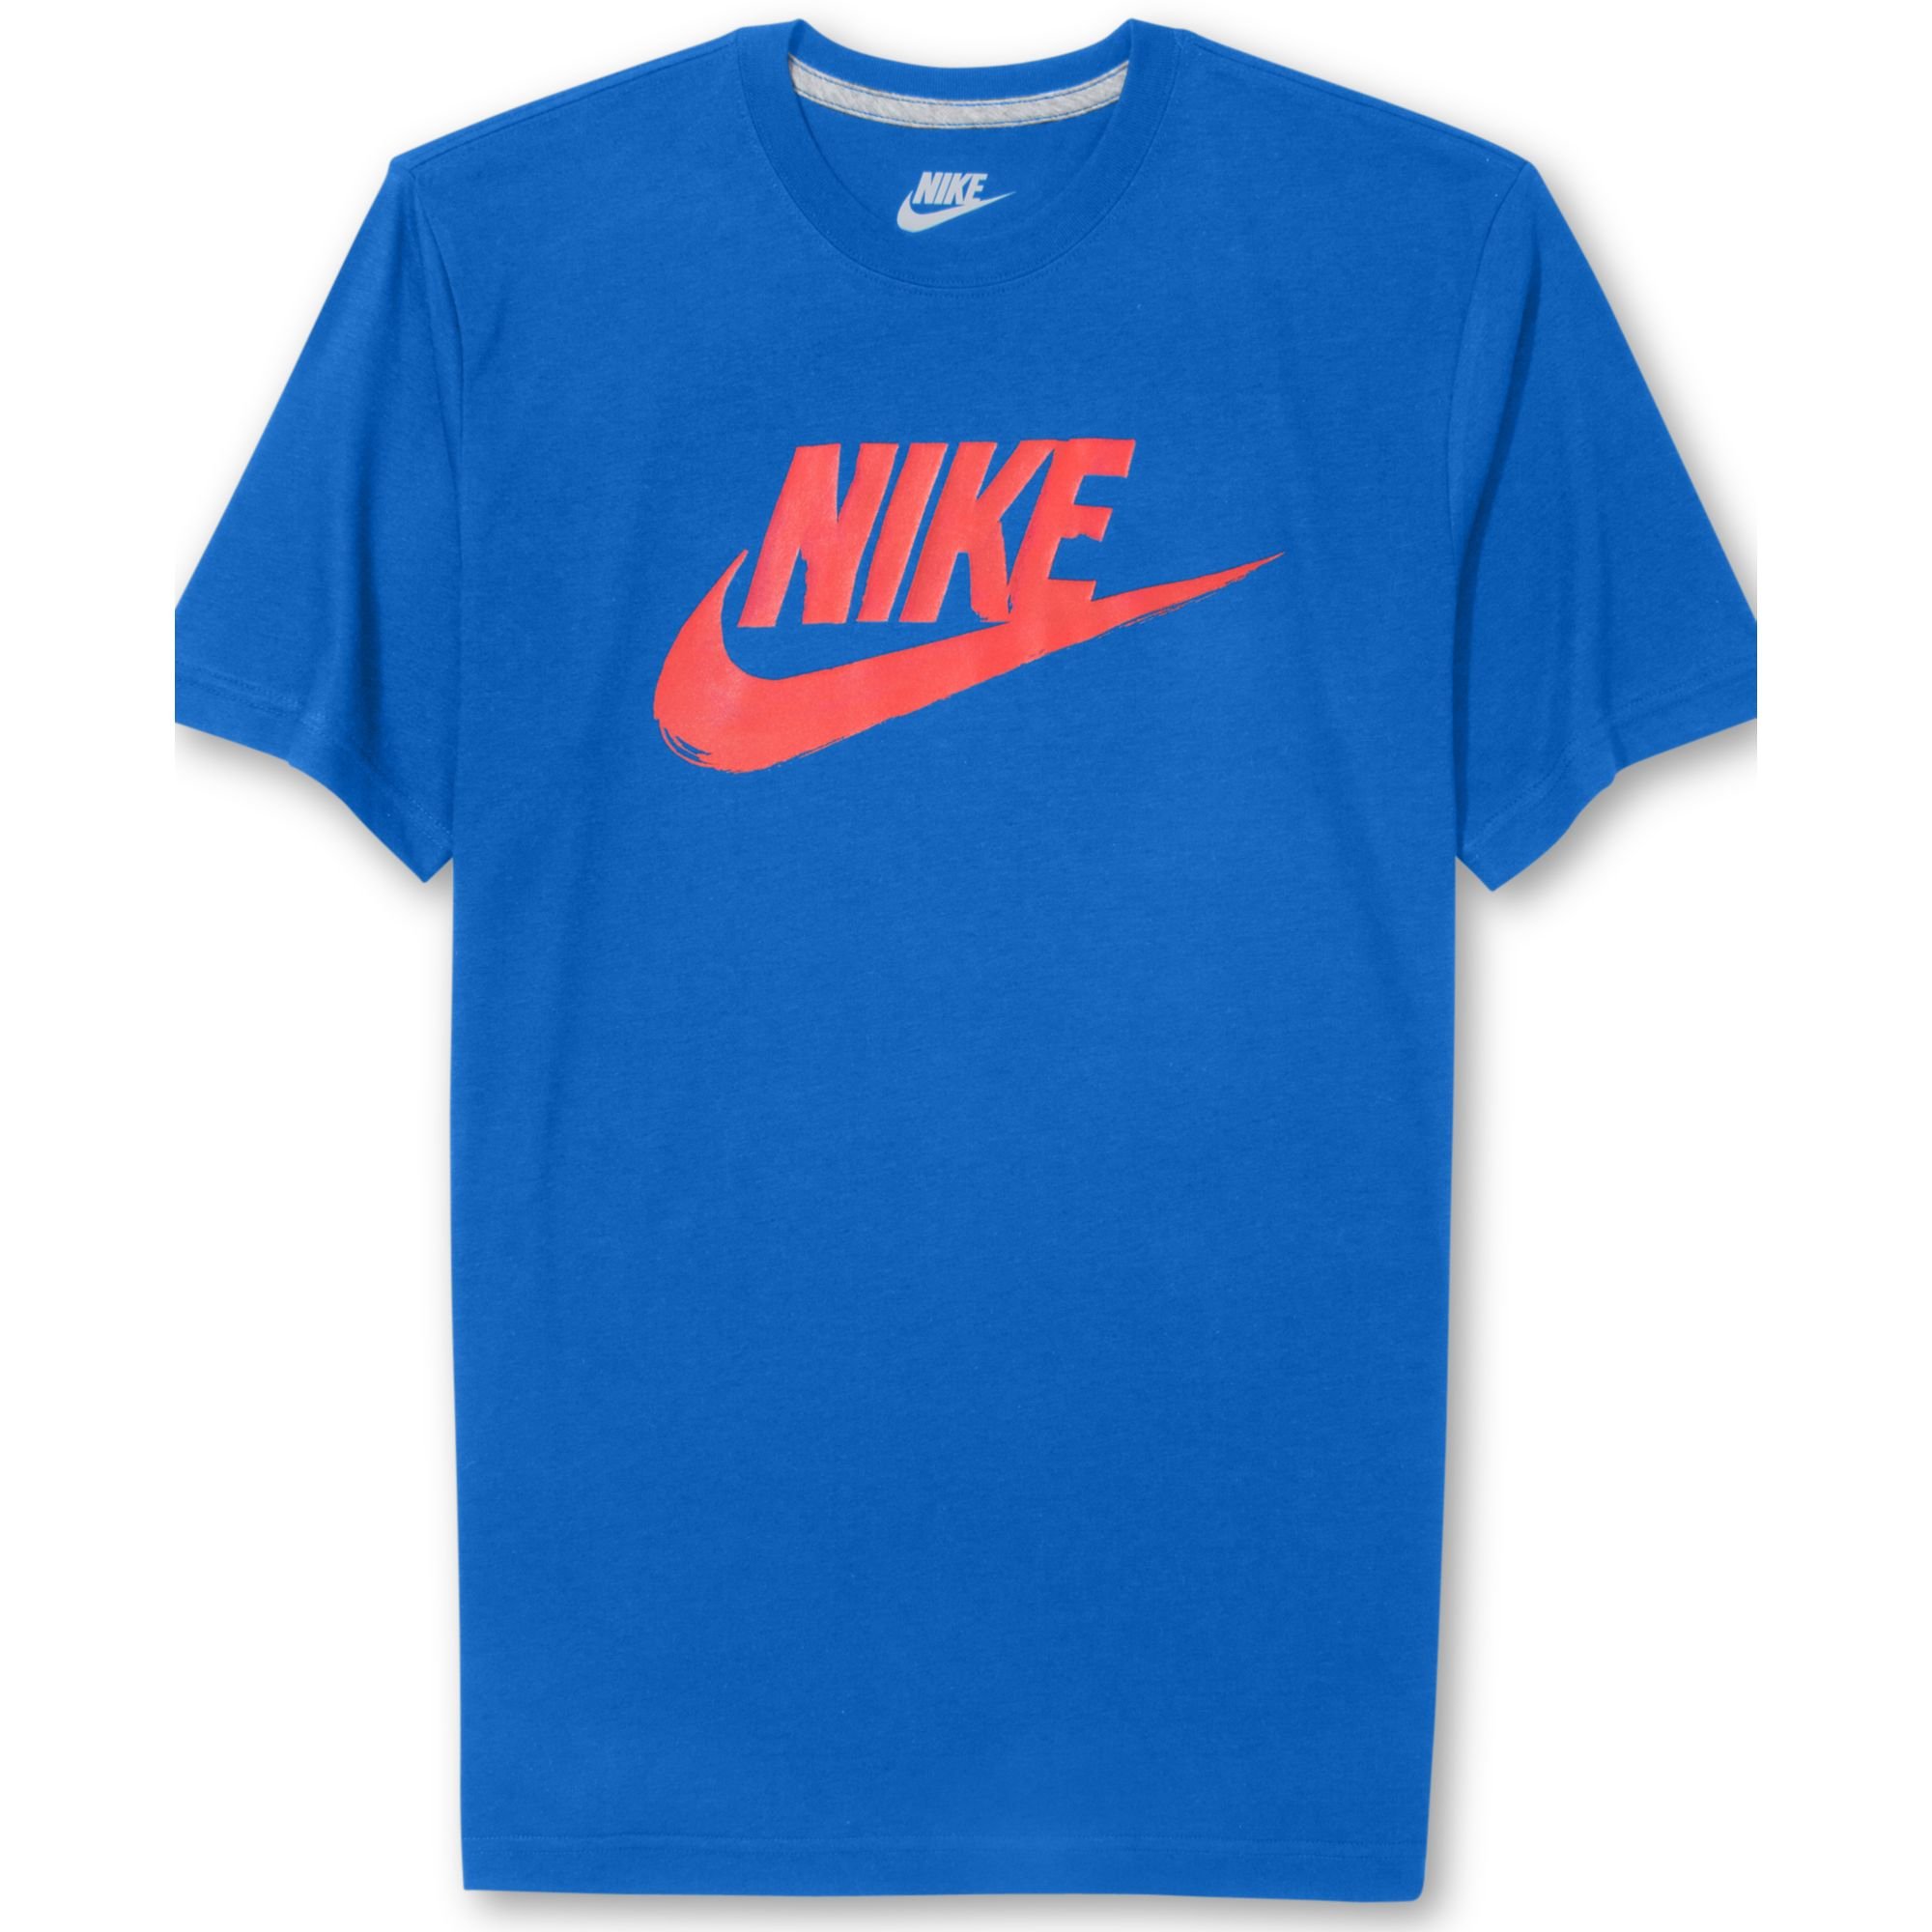 Lyst - Nike Futura Logo Tshirt in Orange for Men